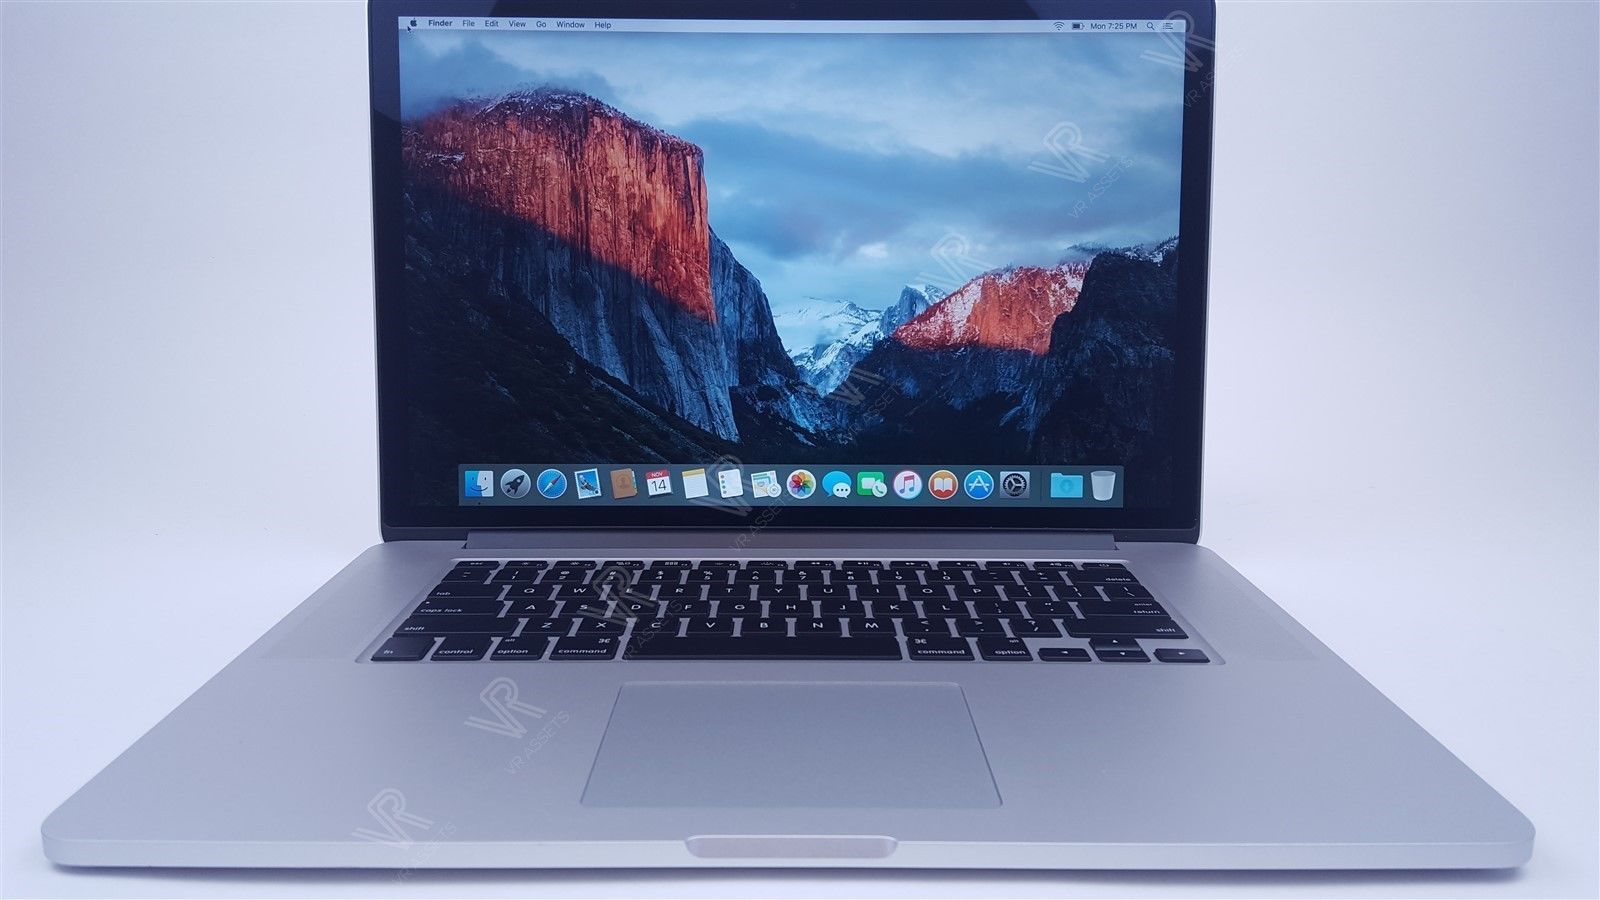 Apple macbook pro a1286 laptop lenovo thinkpad x220 laptop price